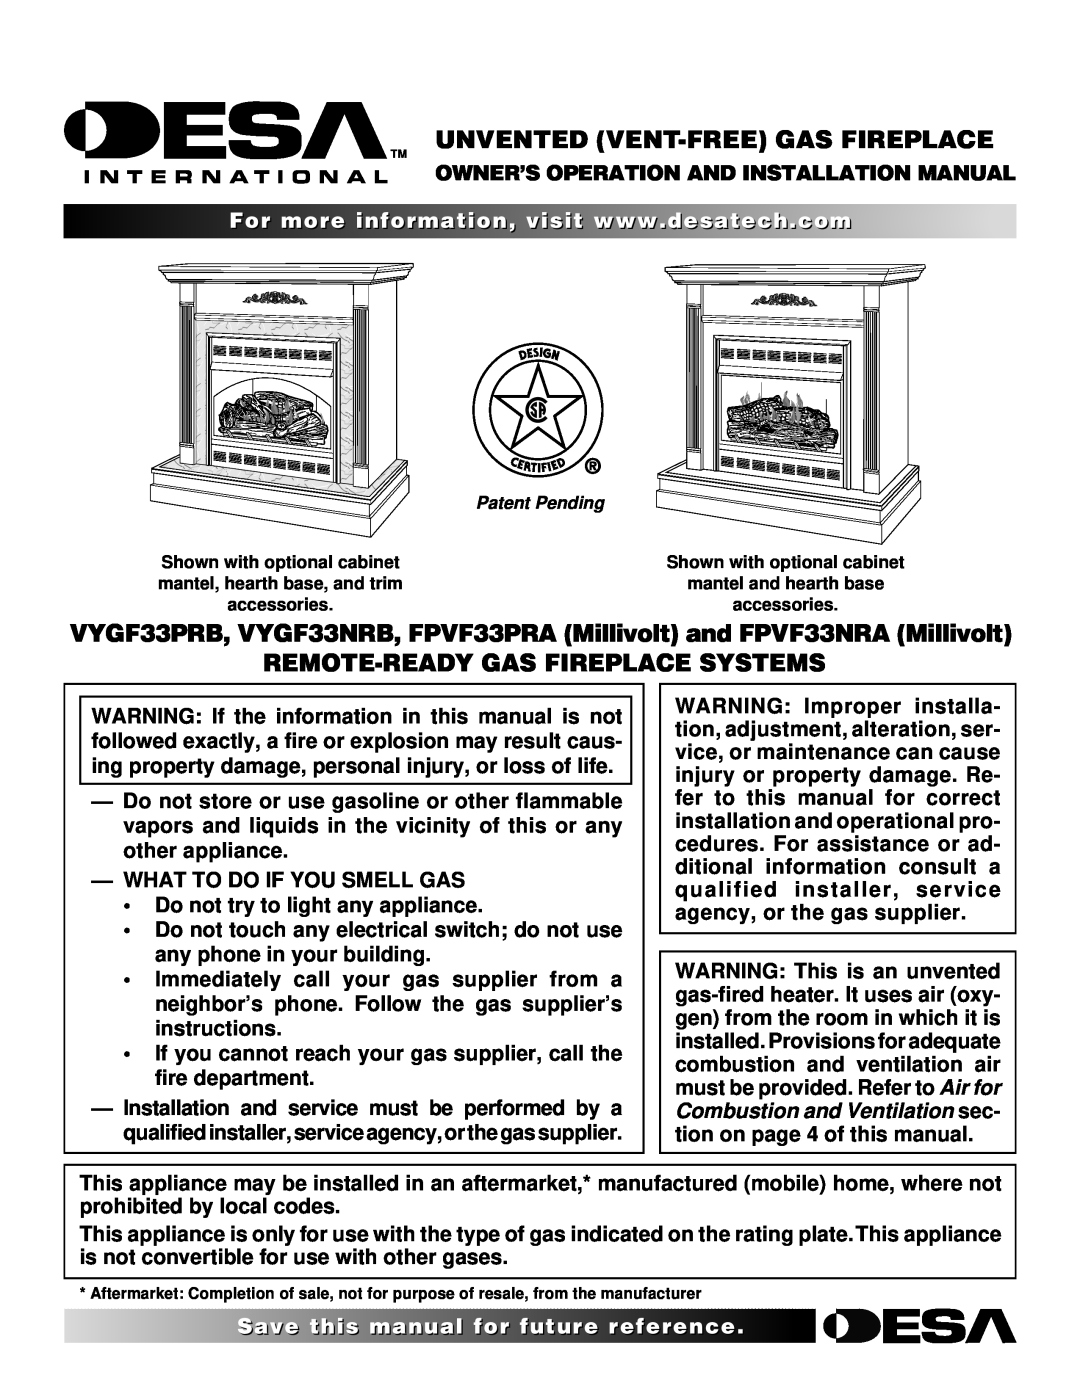 Desa VYGF33PRB installation manual Owner’S Operation And Installation Manual, What To Do If You Smell Gas, Qqqq¢¢¢¢ 